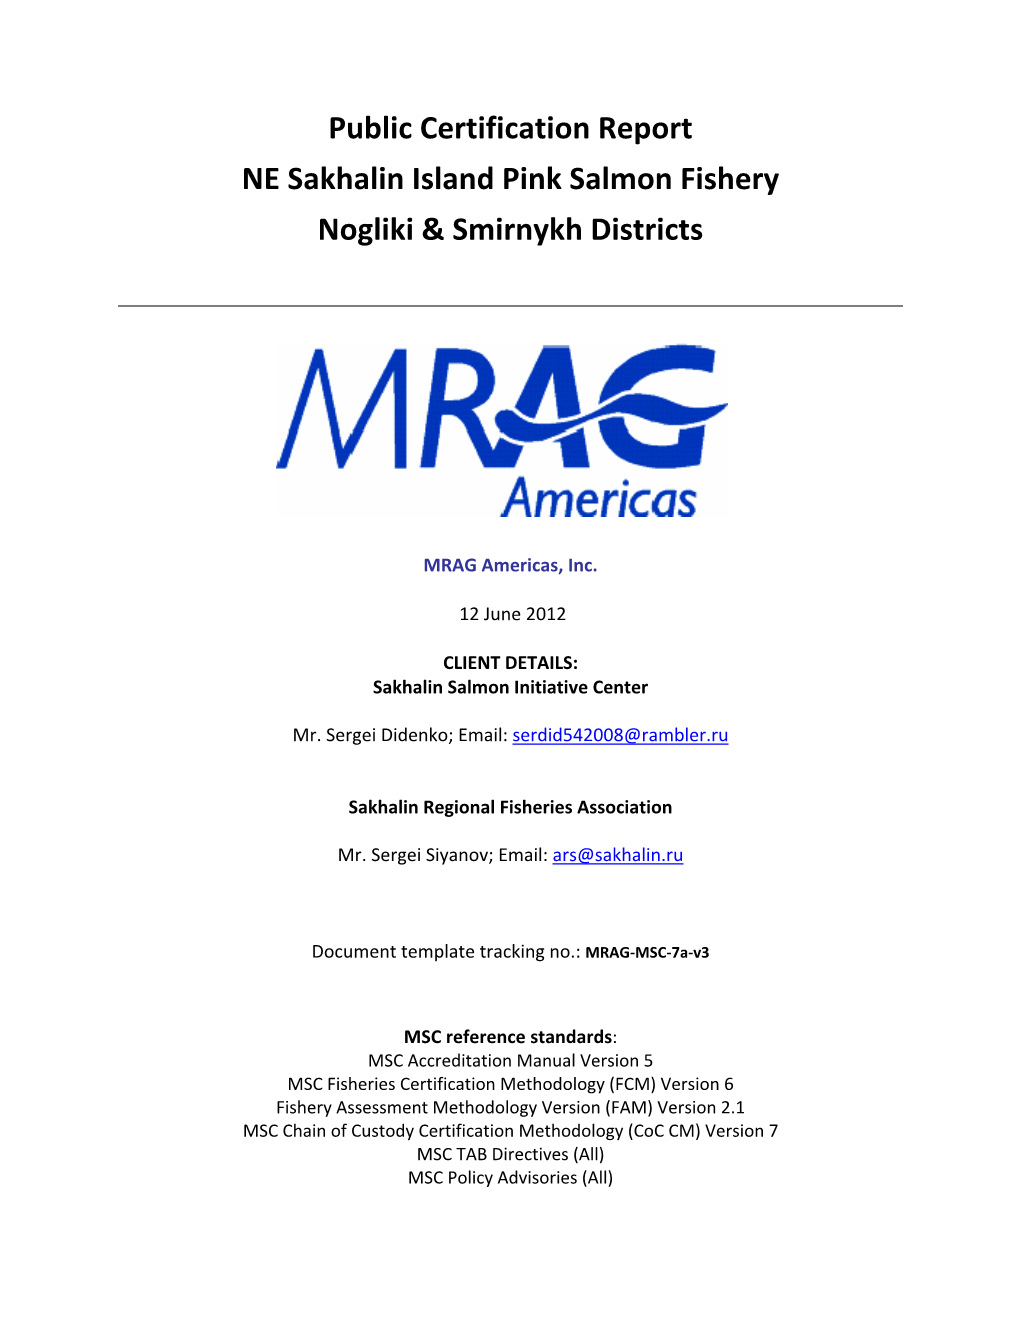 Public Certification Report NE Sakhalin Island Pink Salmon Fishery Nogliki & Smirnykh Districts